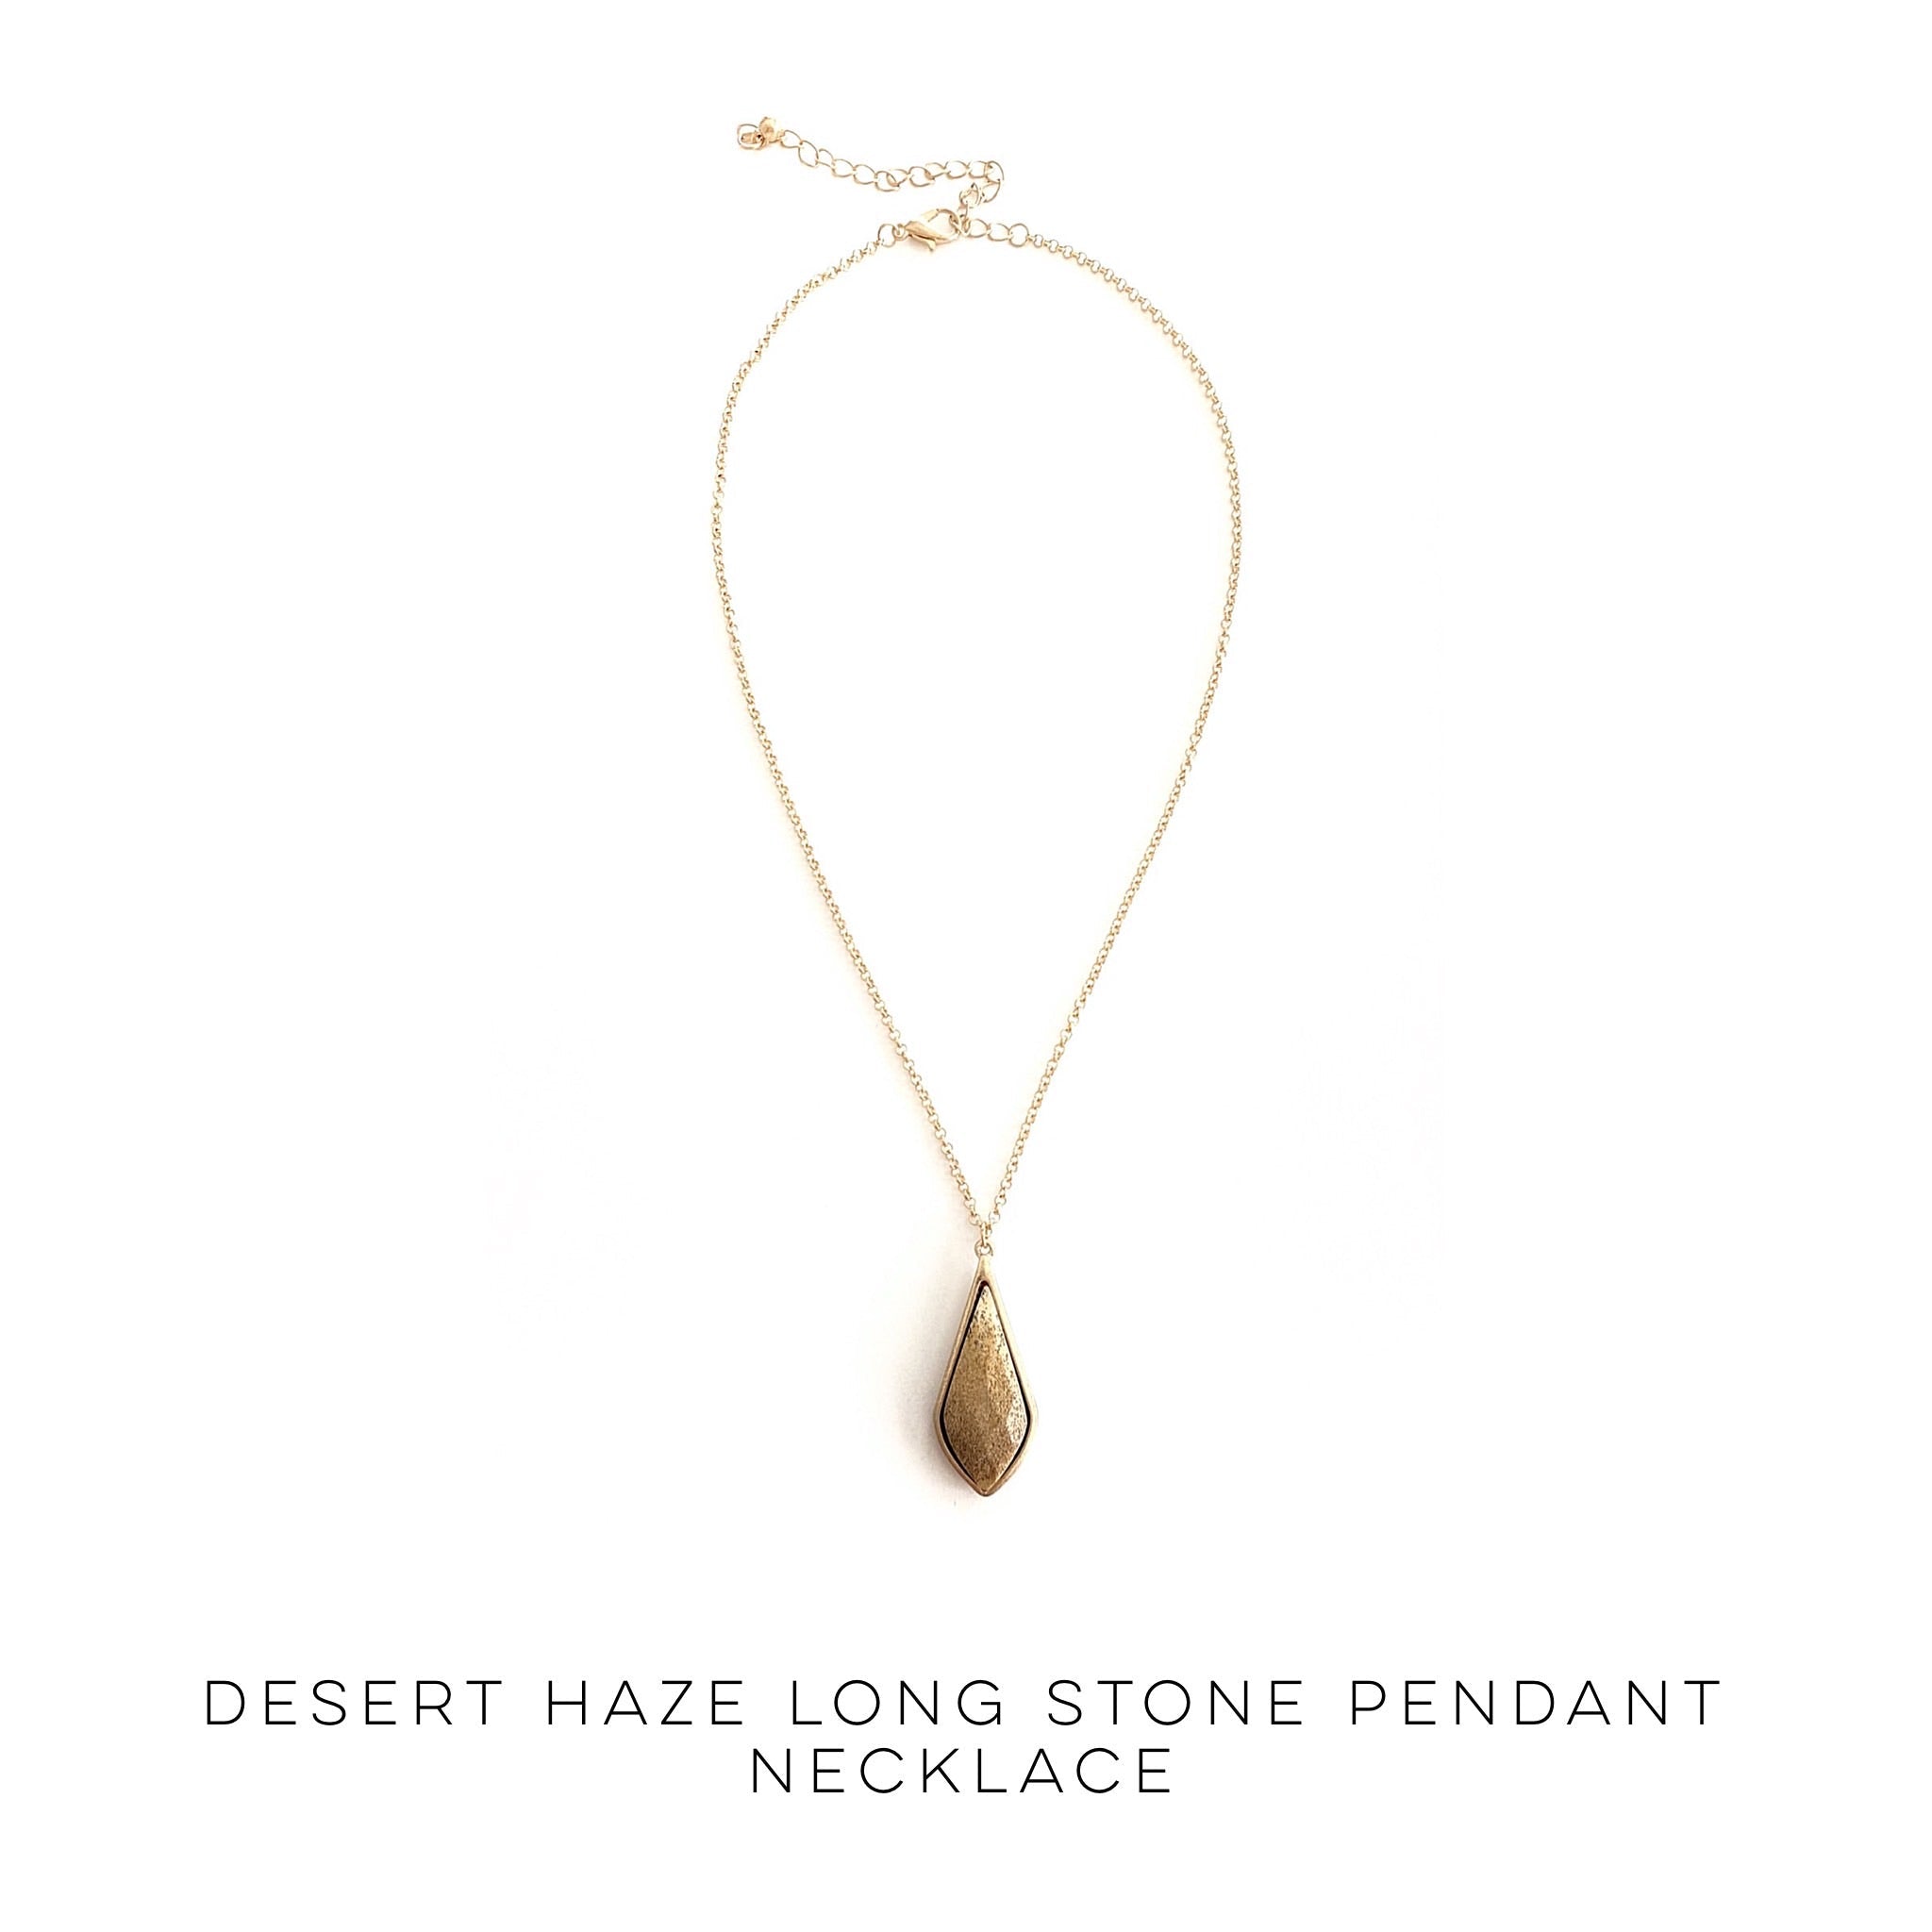 Desert Haze Long Stone Pendant Necklace